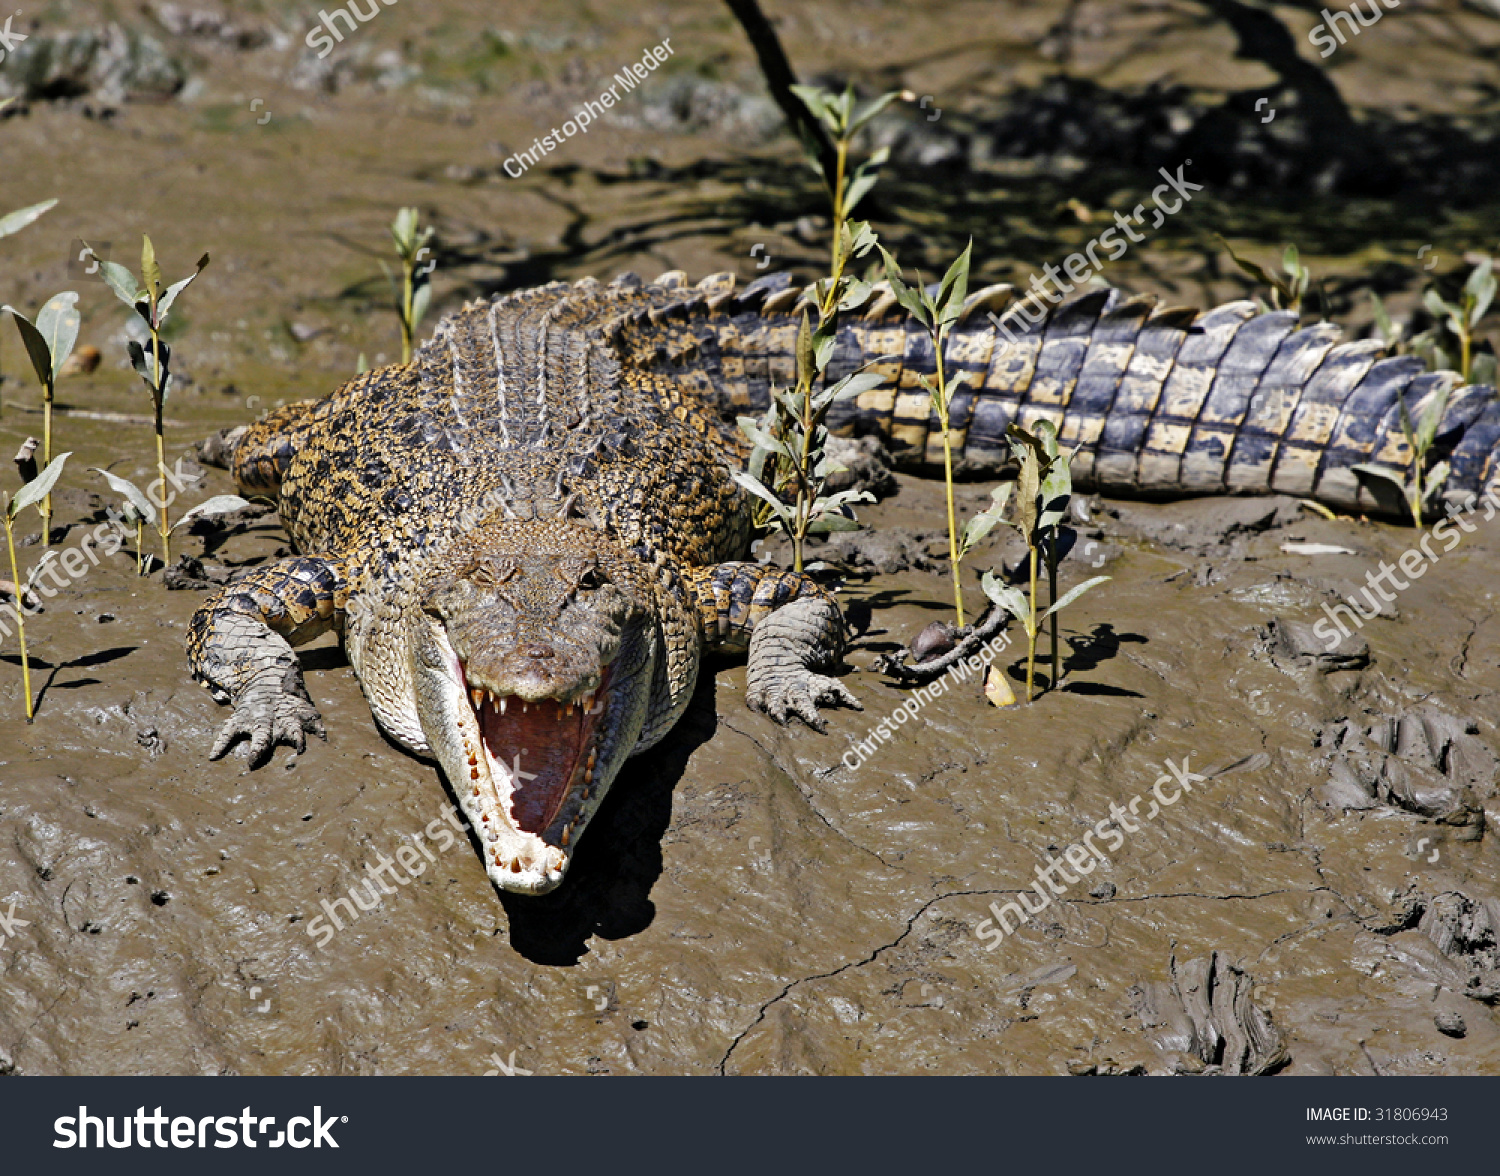 Salt Crocodile Australian Outback (Edit Now) 31806943